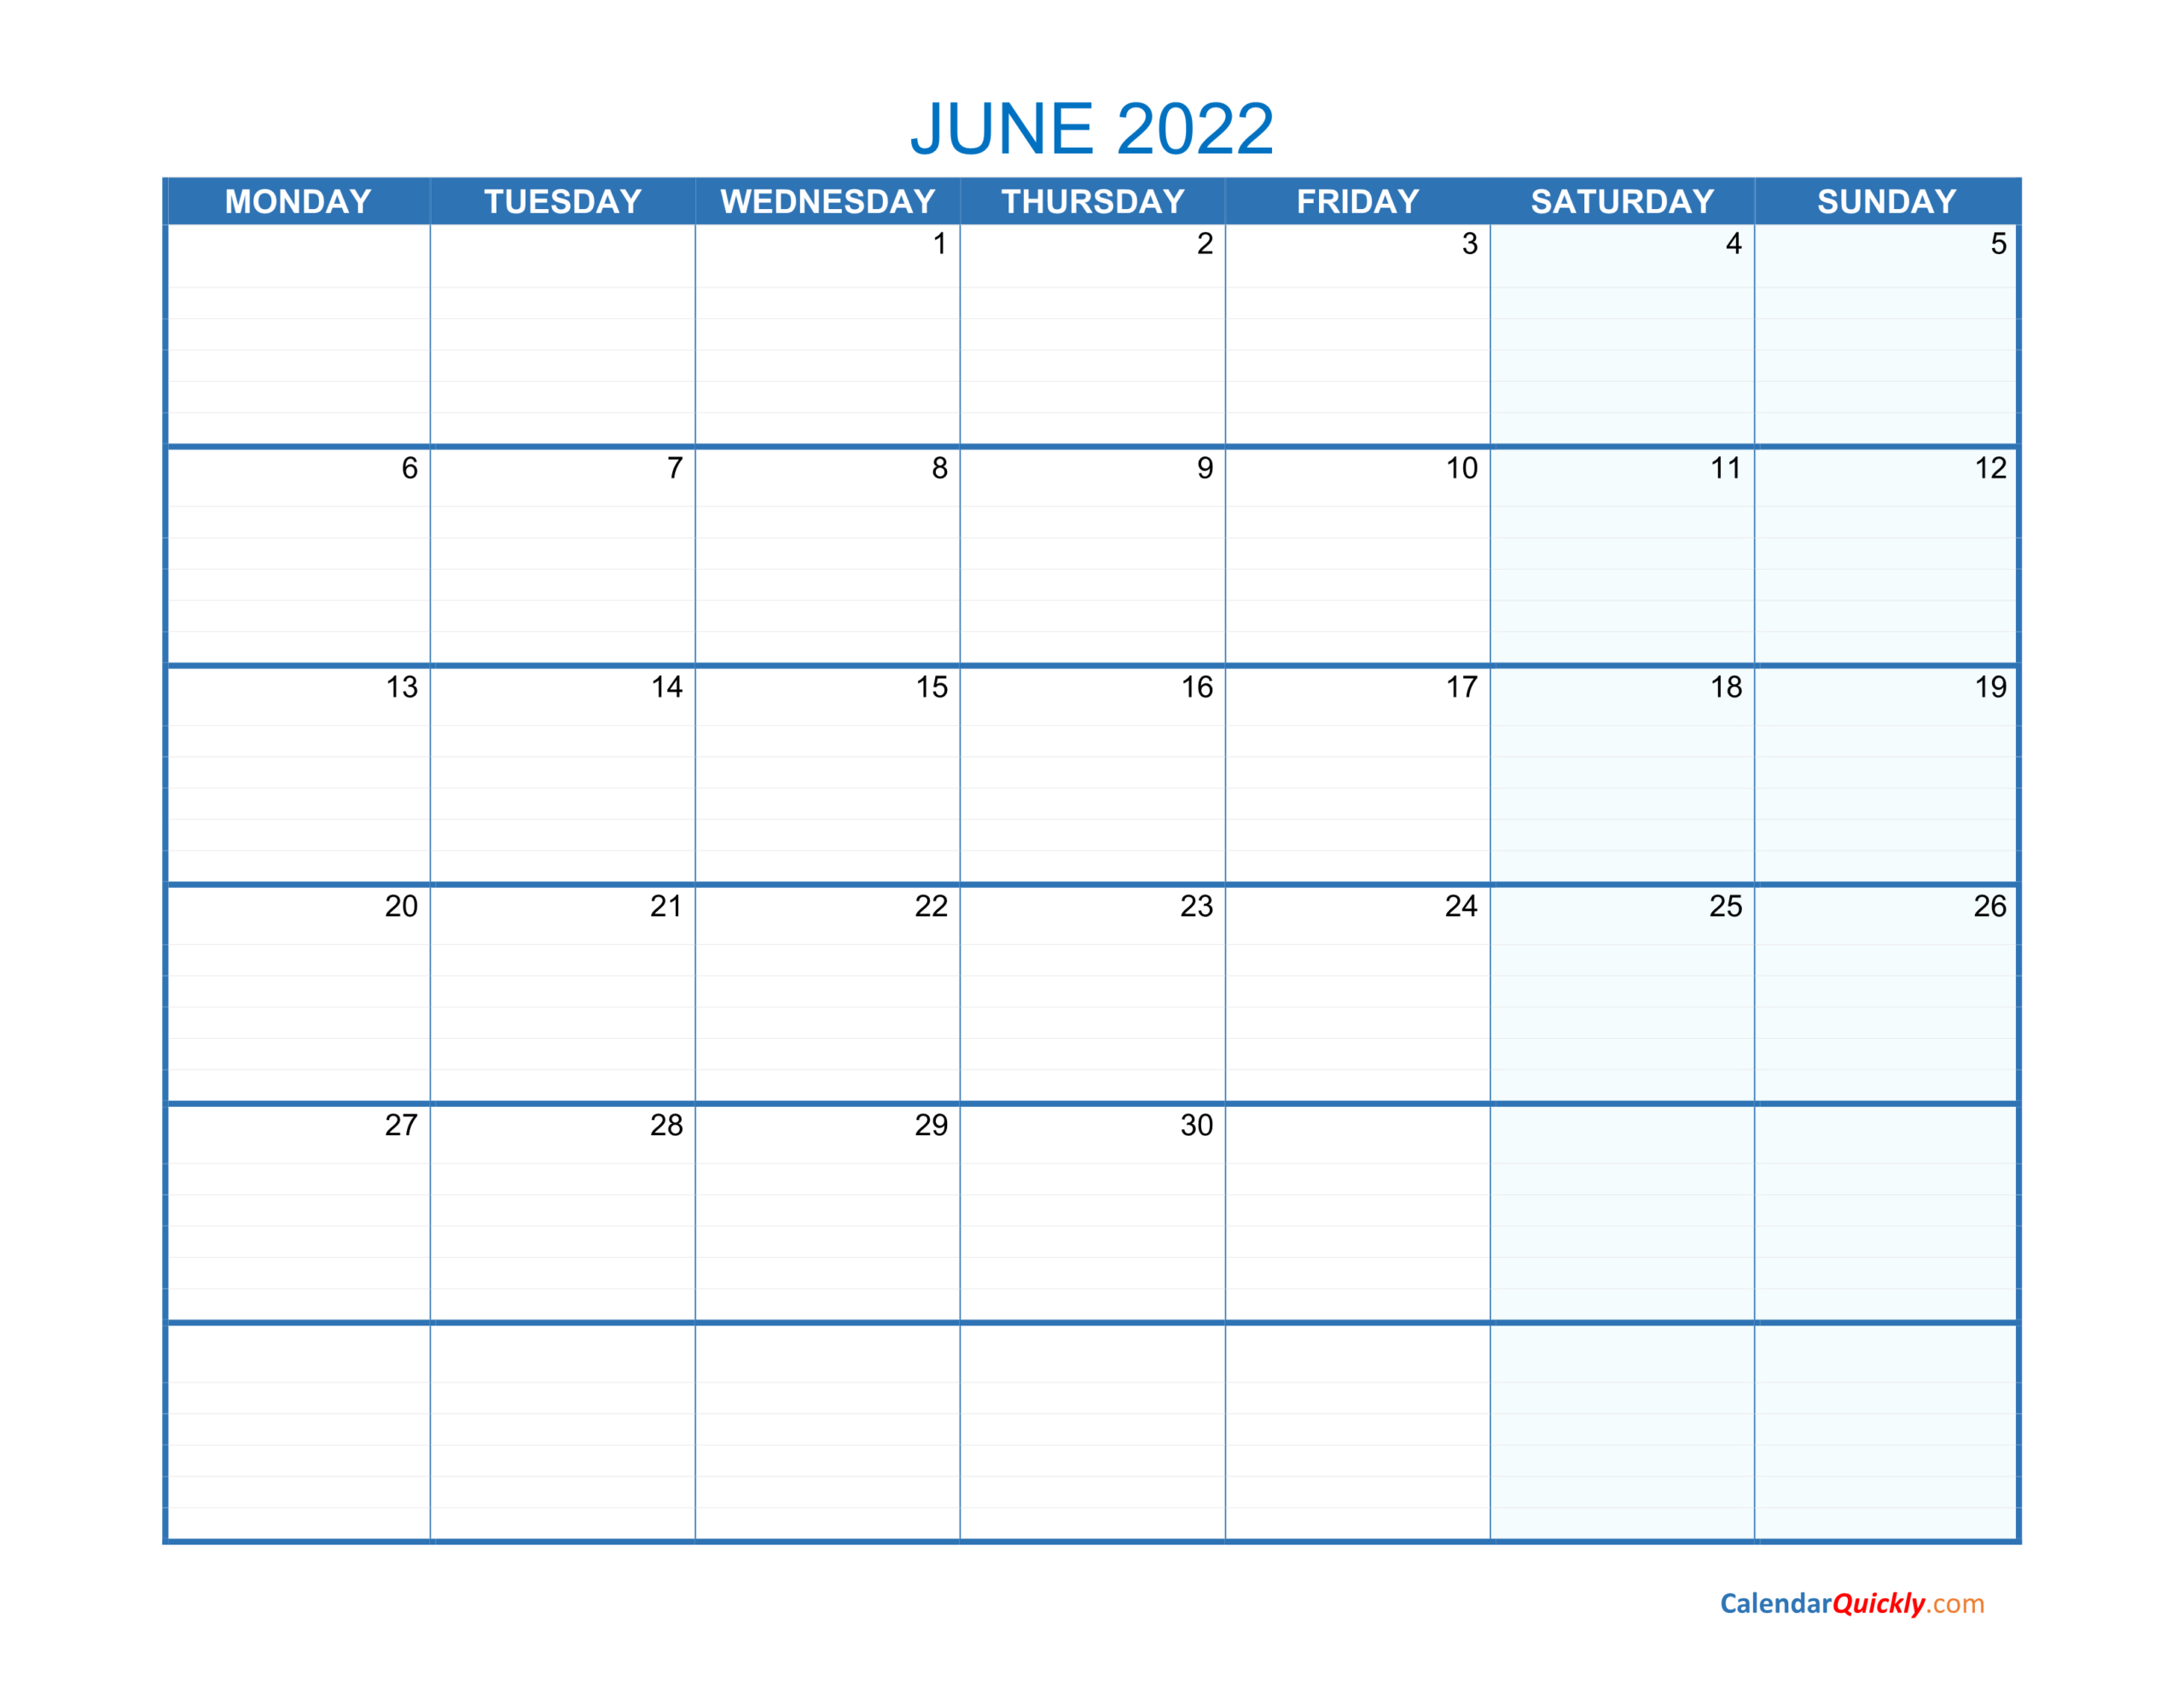 June Monday 2022 Blank Calendar | Calendar Quickly  January Through June 2022 Calendar